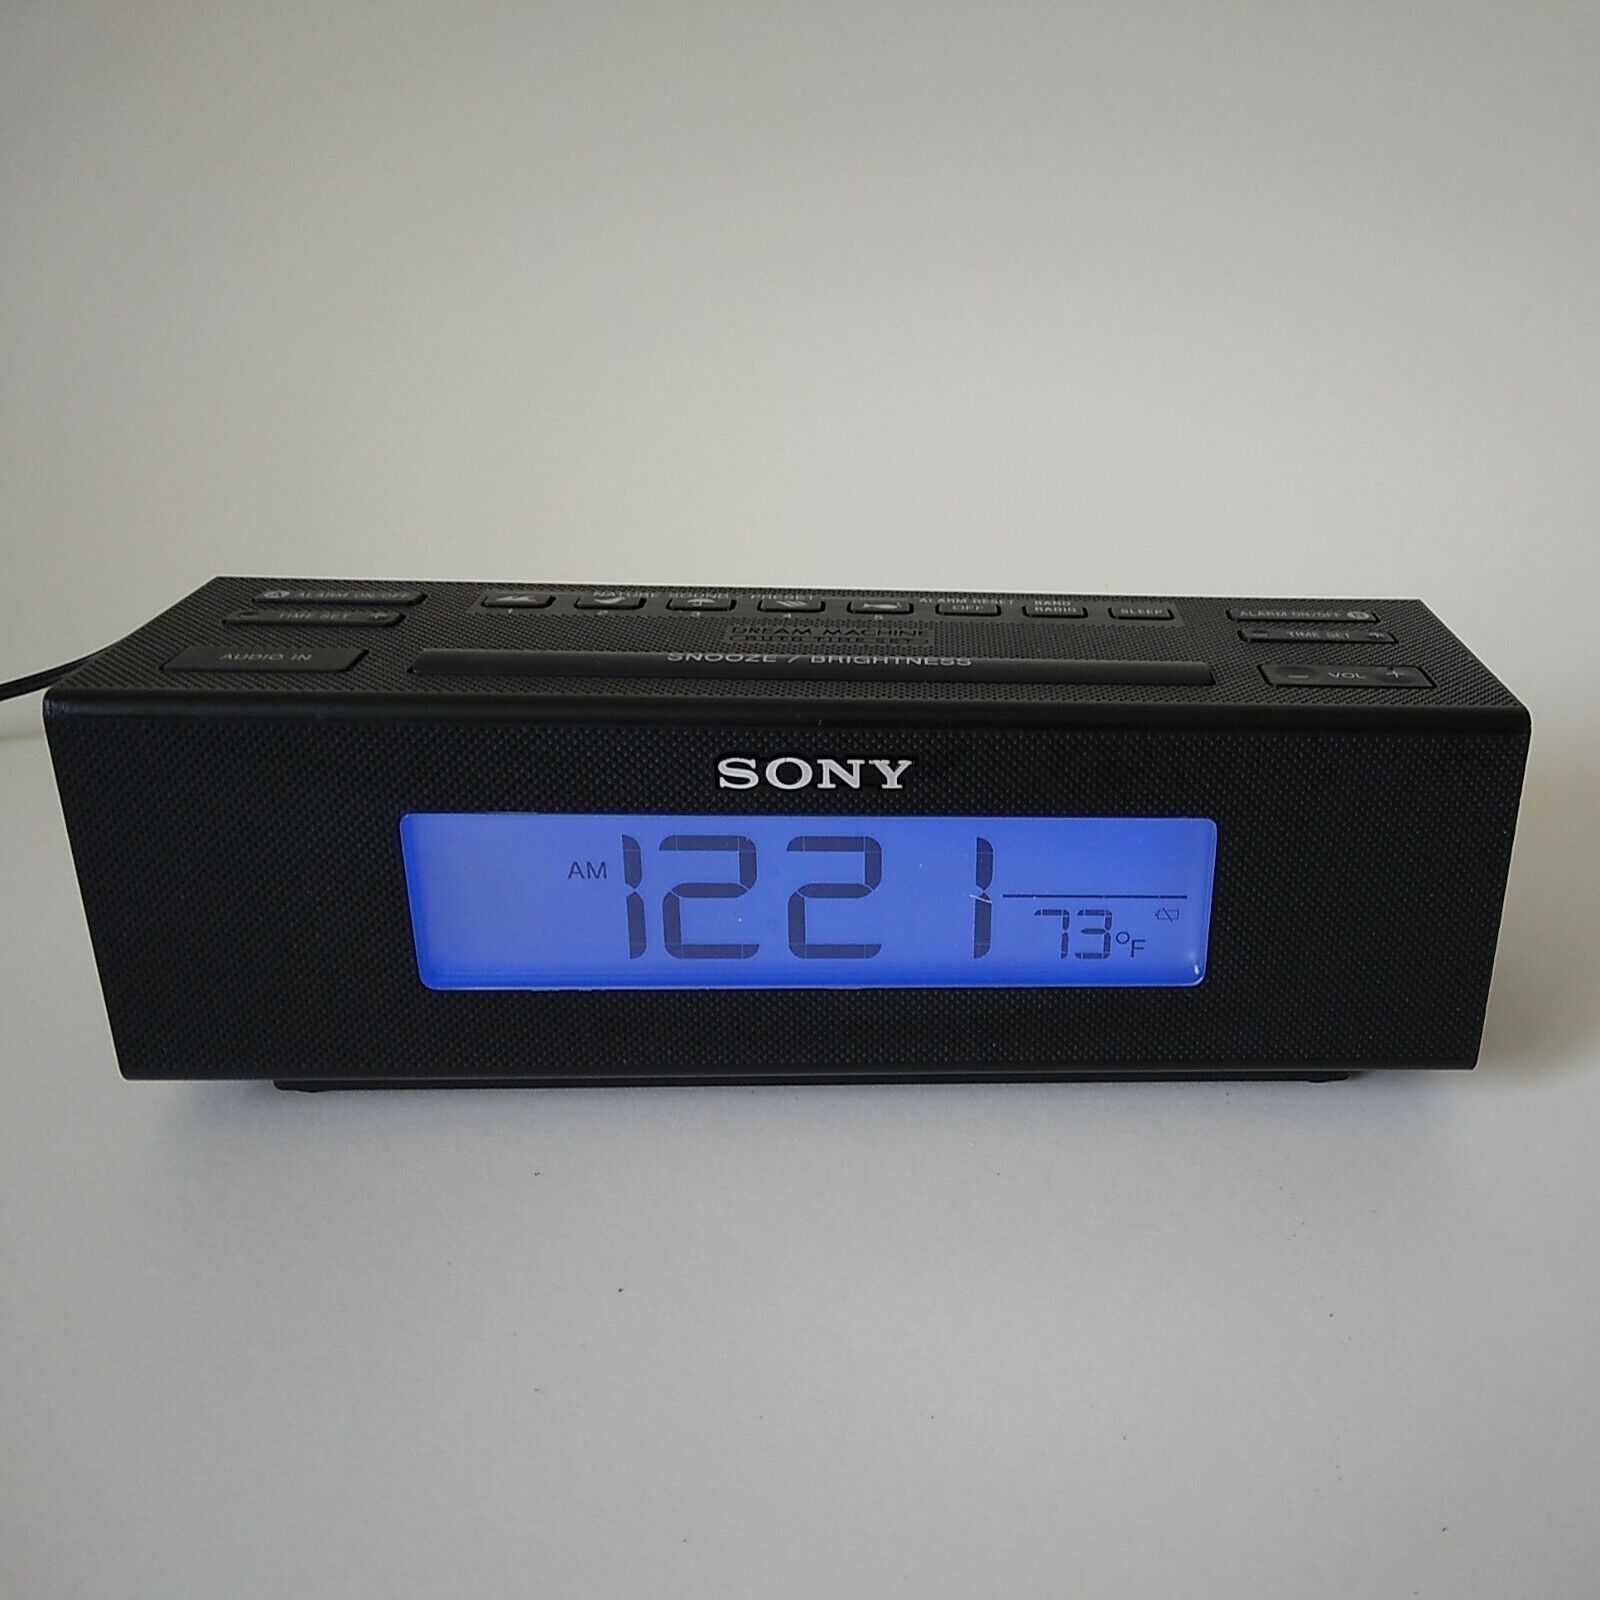 Sony Dream Machine ICF-C707 Alarm Clock-Nature Sounds-Black-AM/FM-Tested Works